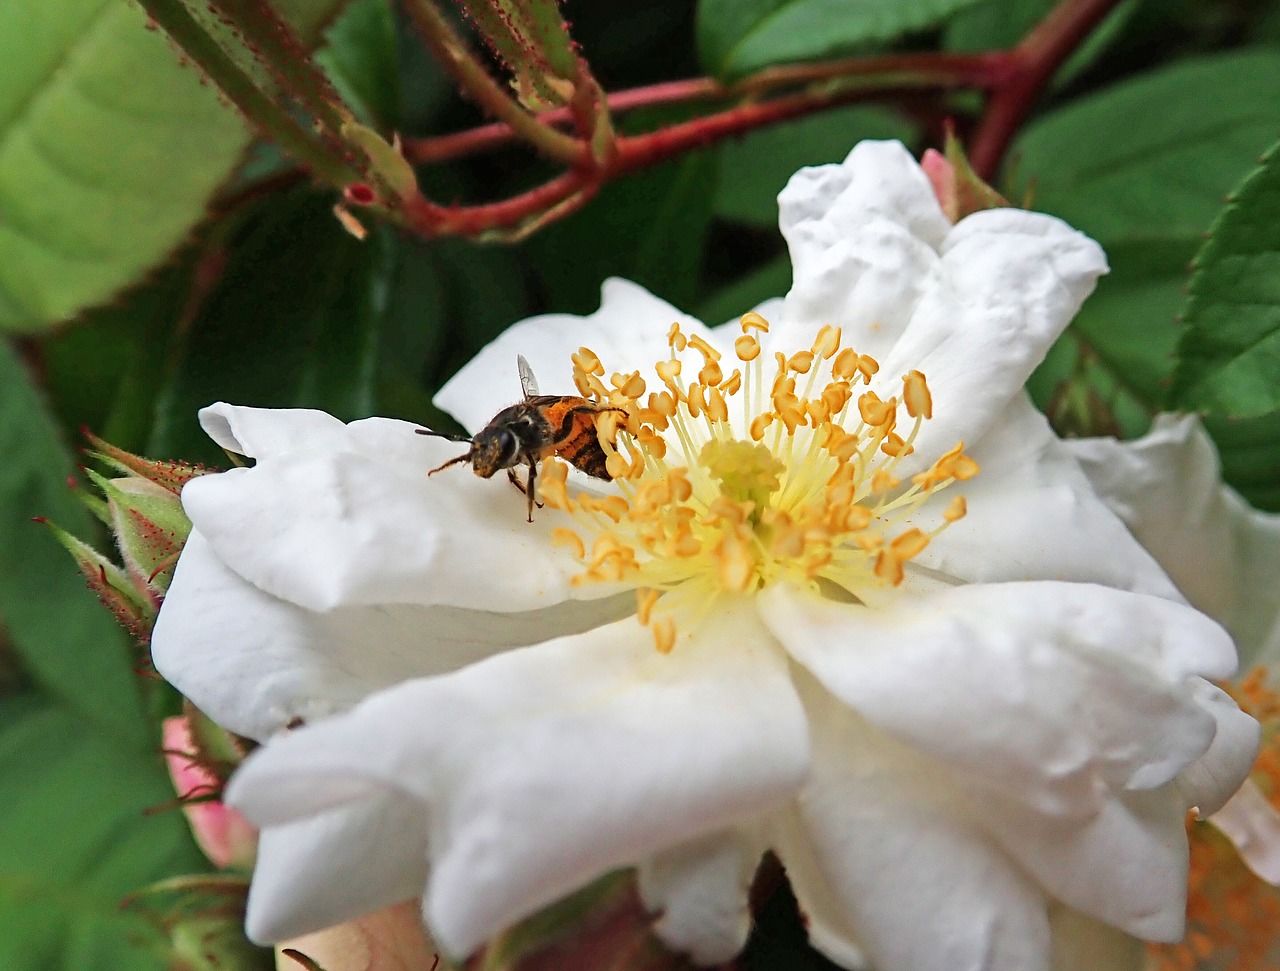 Meet the locals - Native Australian Bees